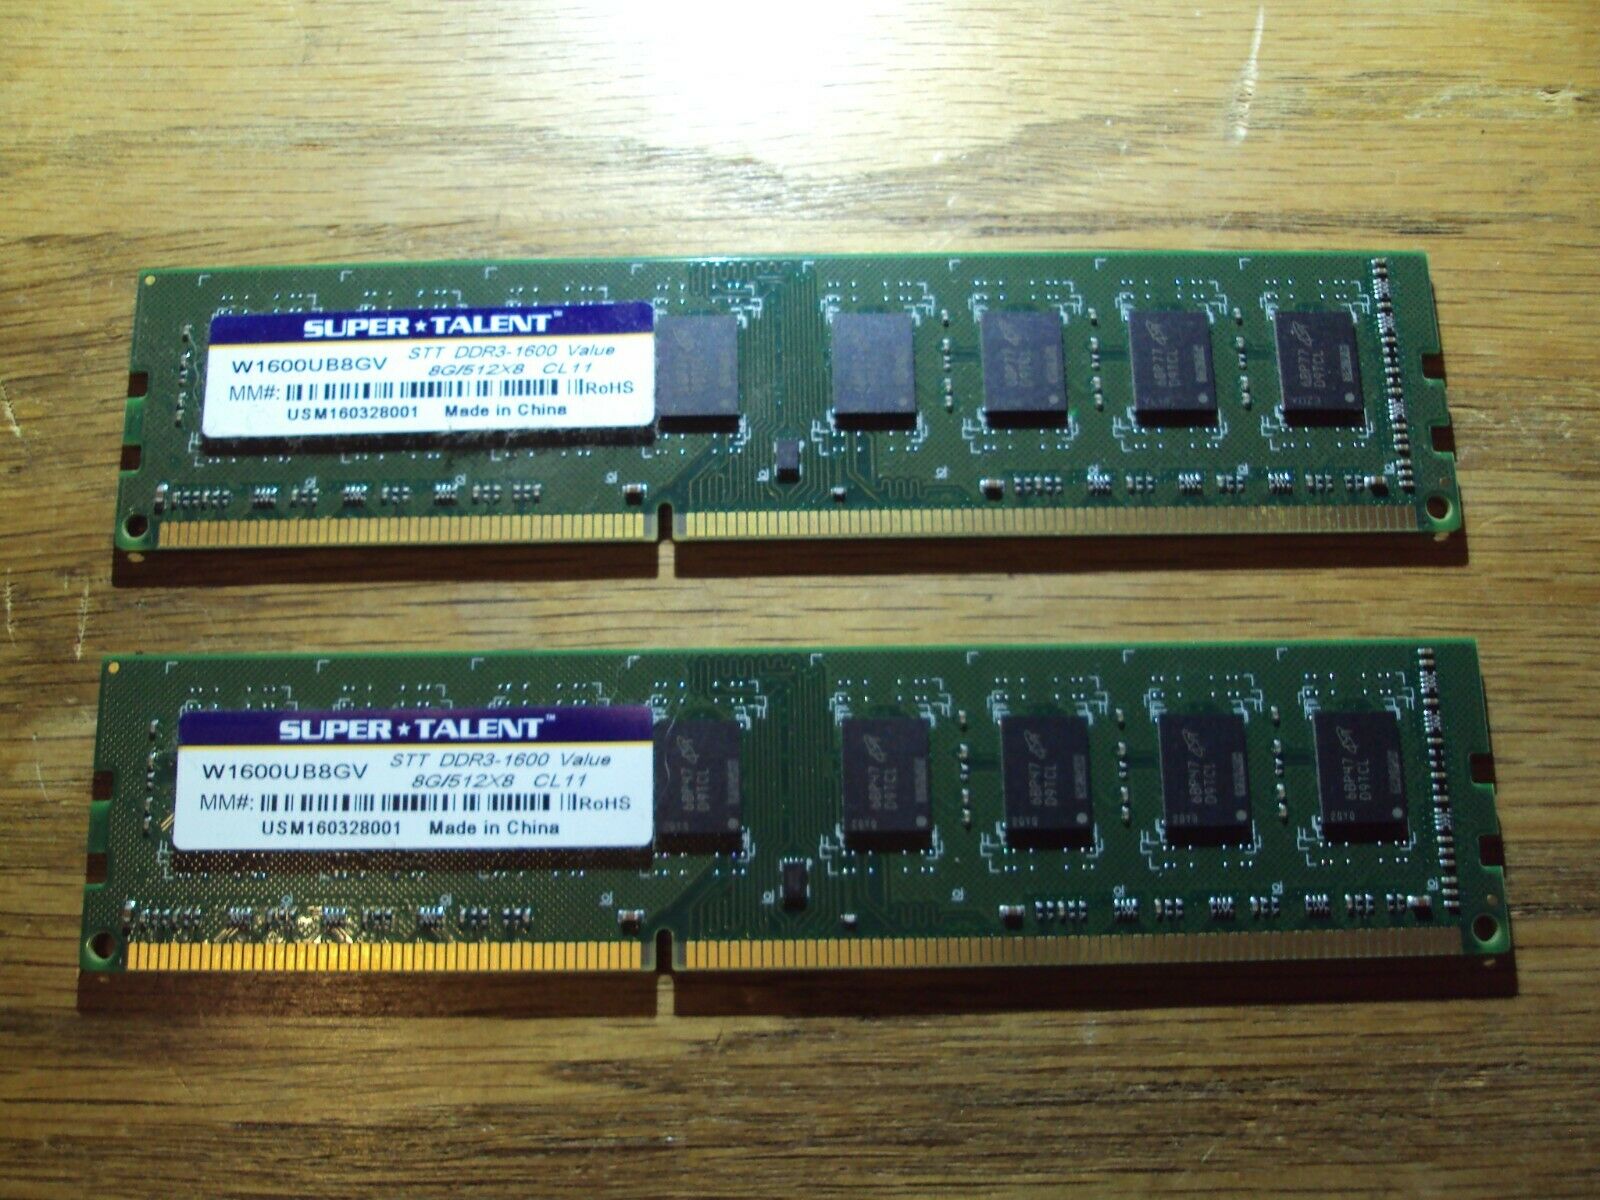 Super Talent W1600UB8GV DDR3-1600 VALUE 8GB 512Mx8 CL11 Memory